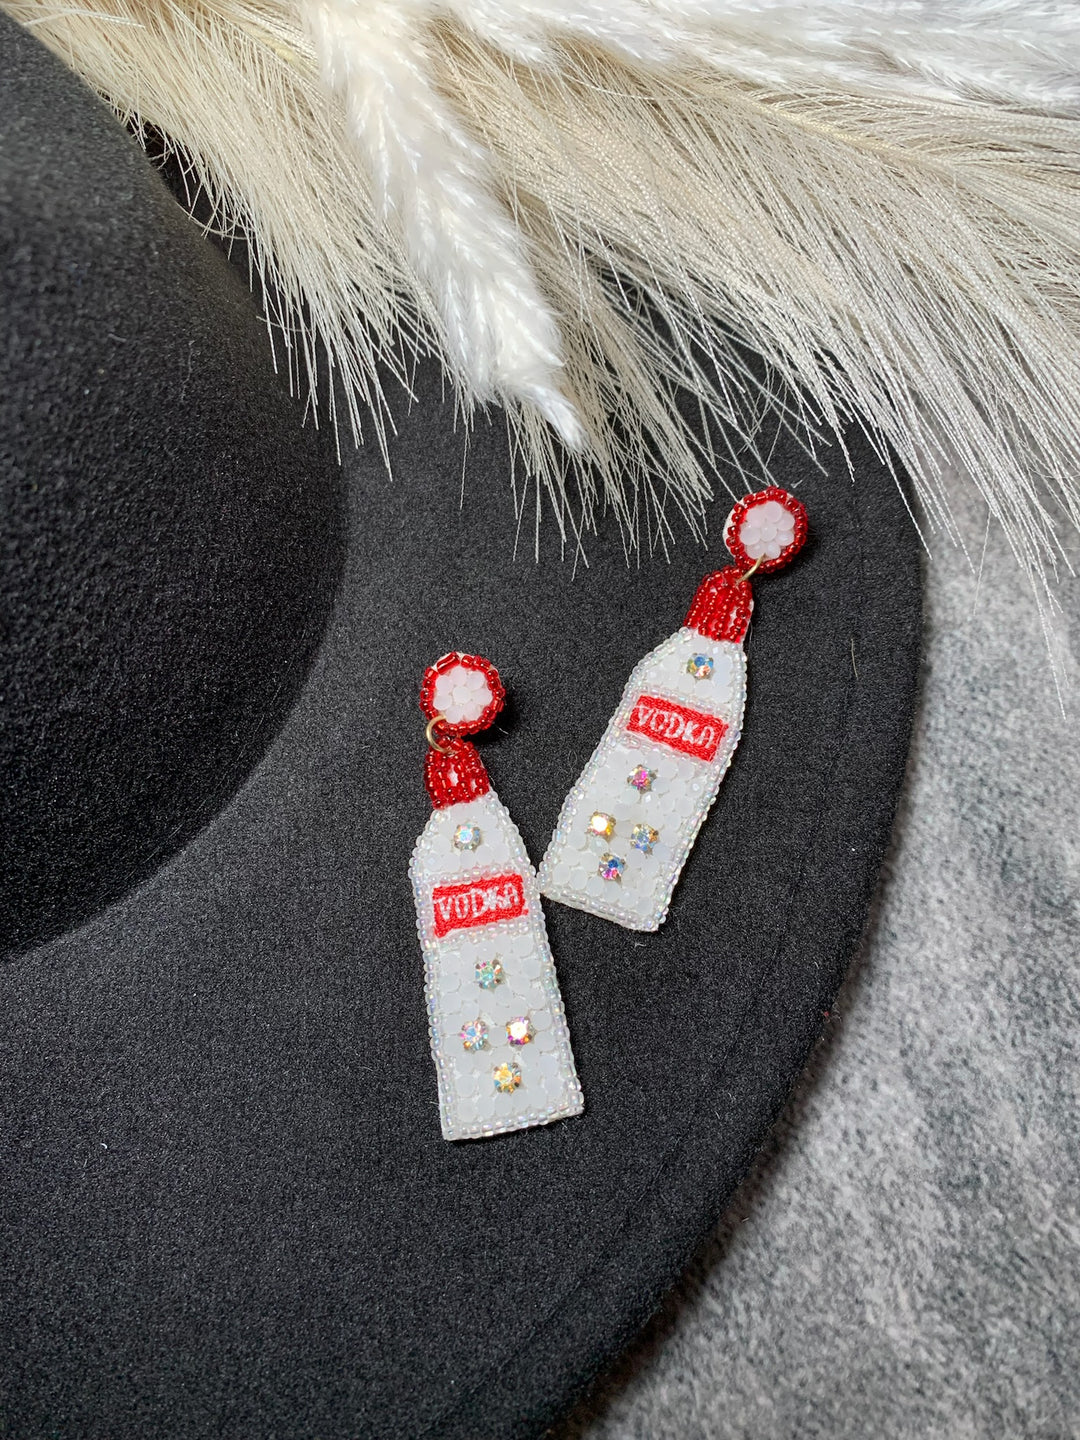 Vodka Seed Bead Earrings